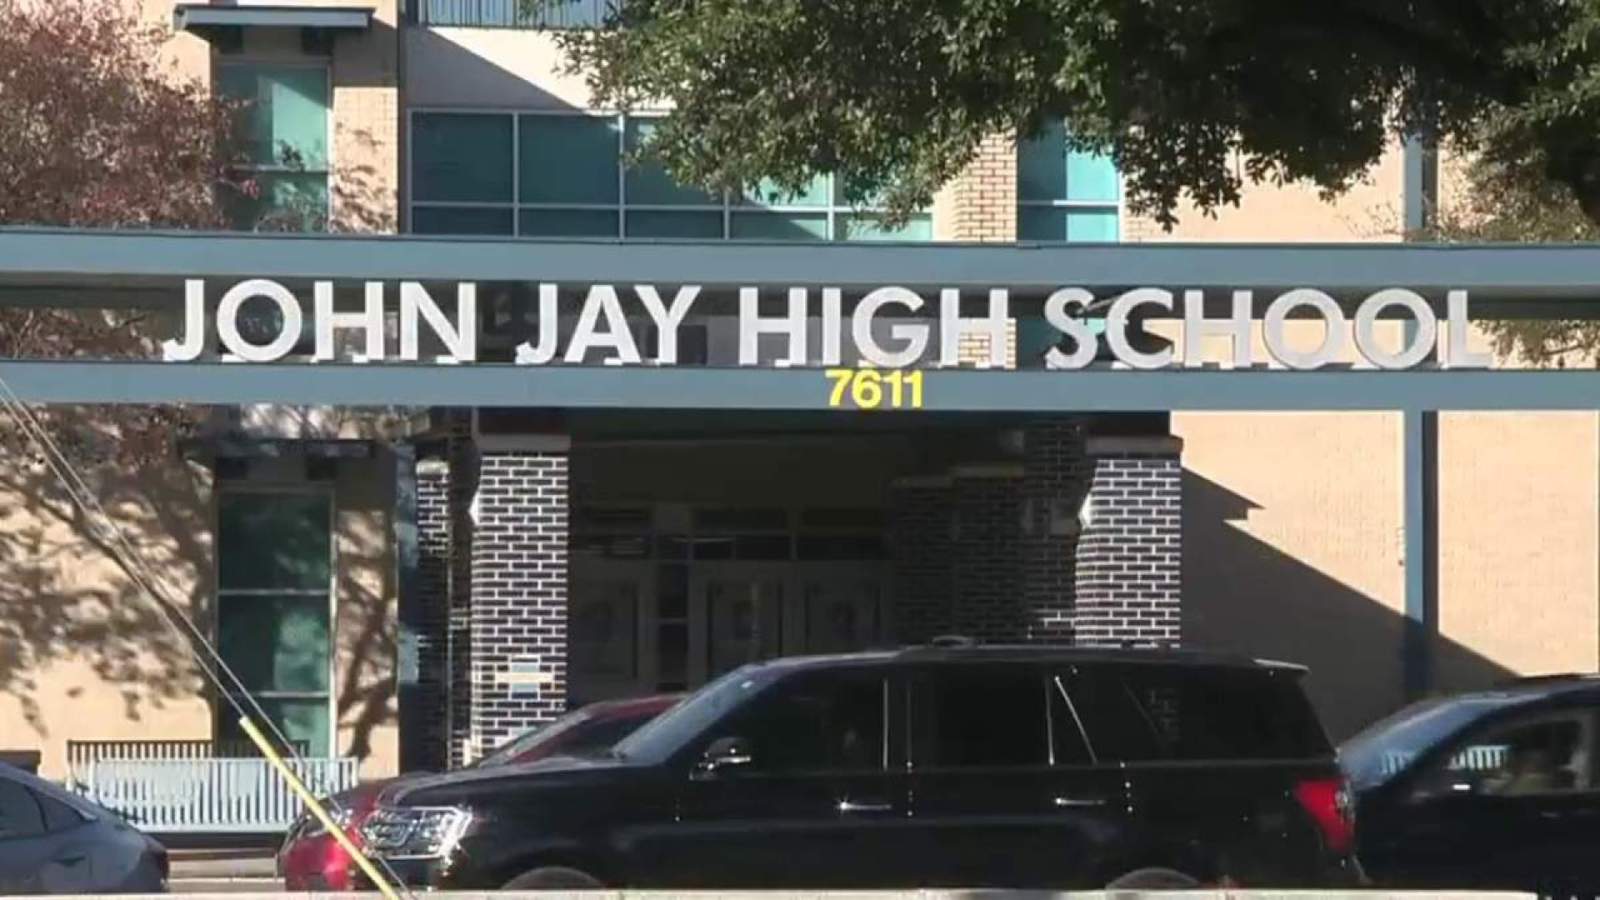 Gun found in vehicle at John Jay High School, officials say